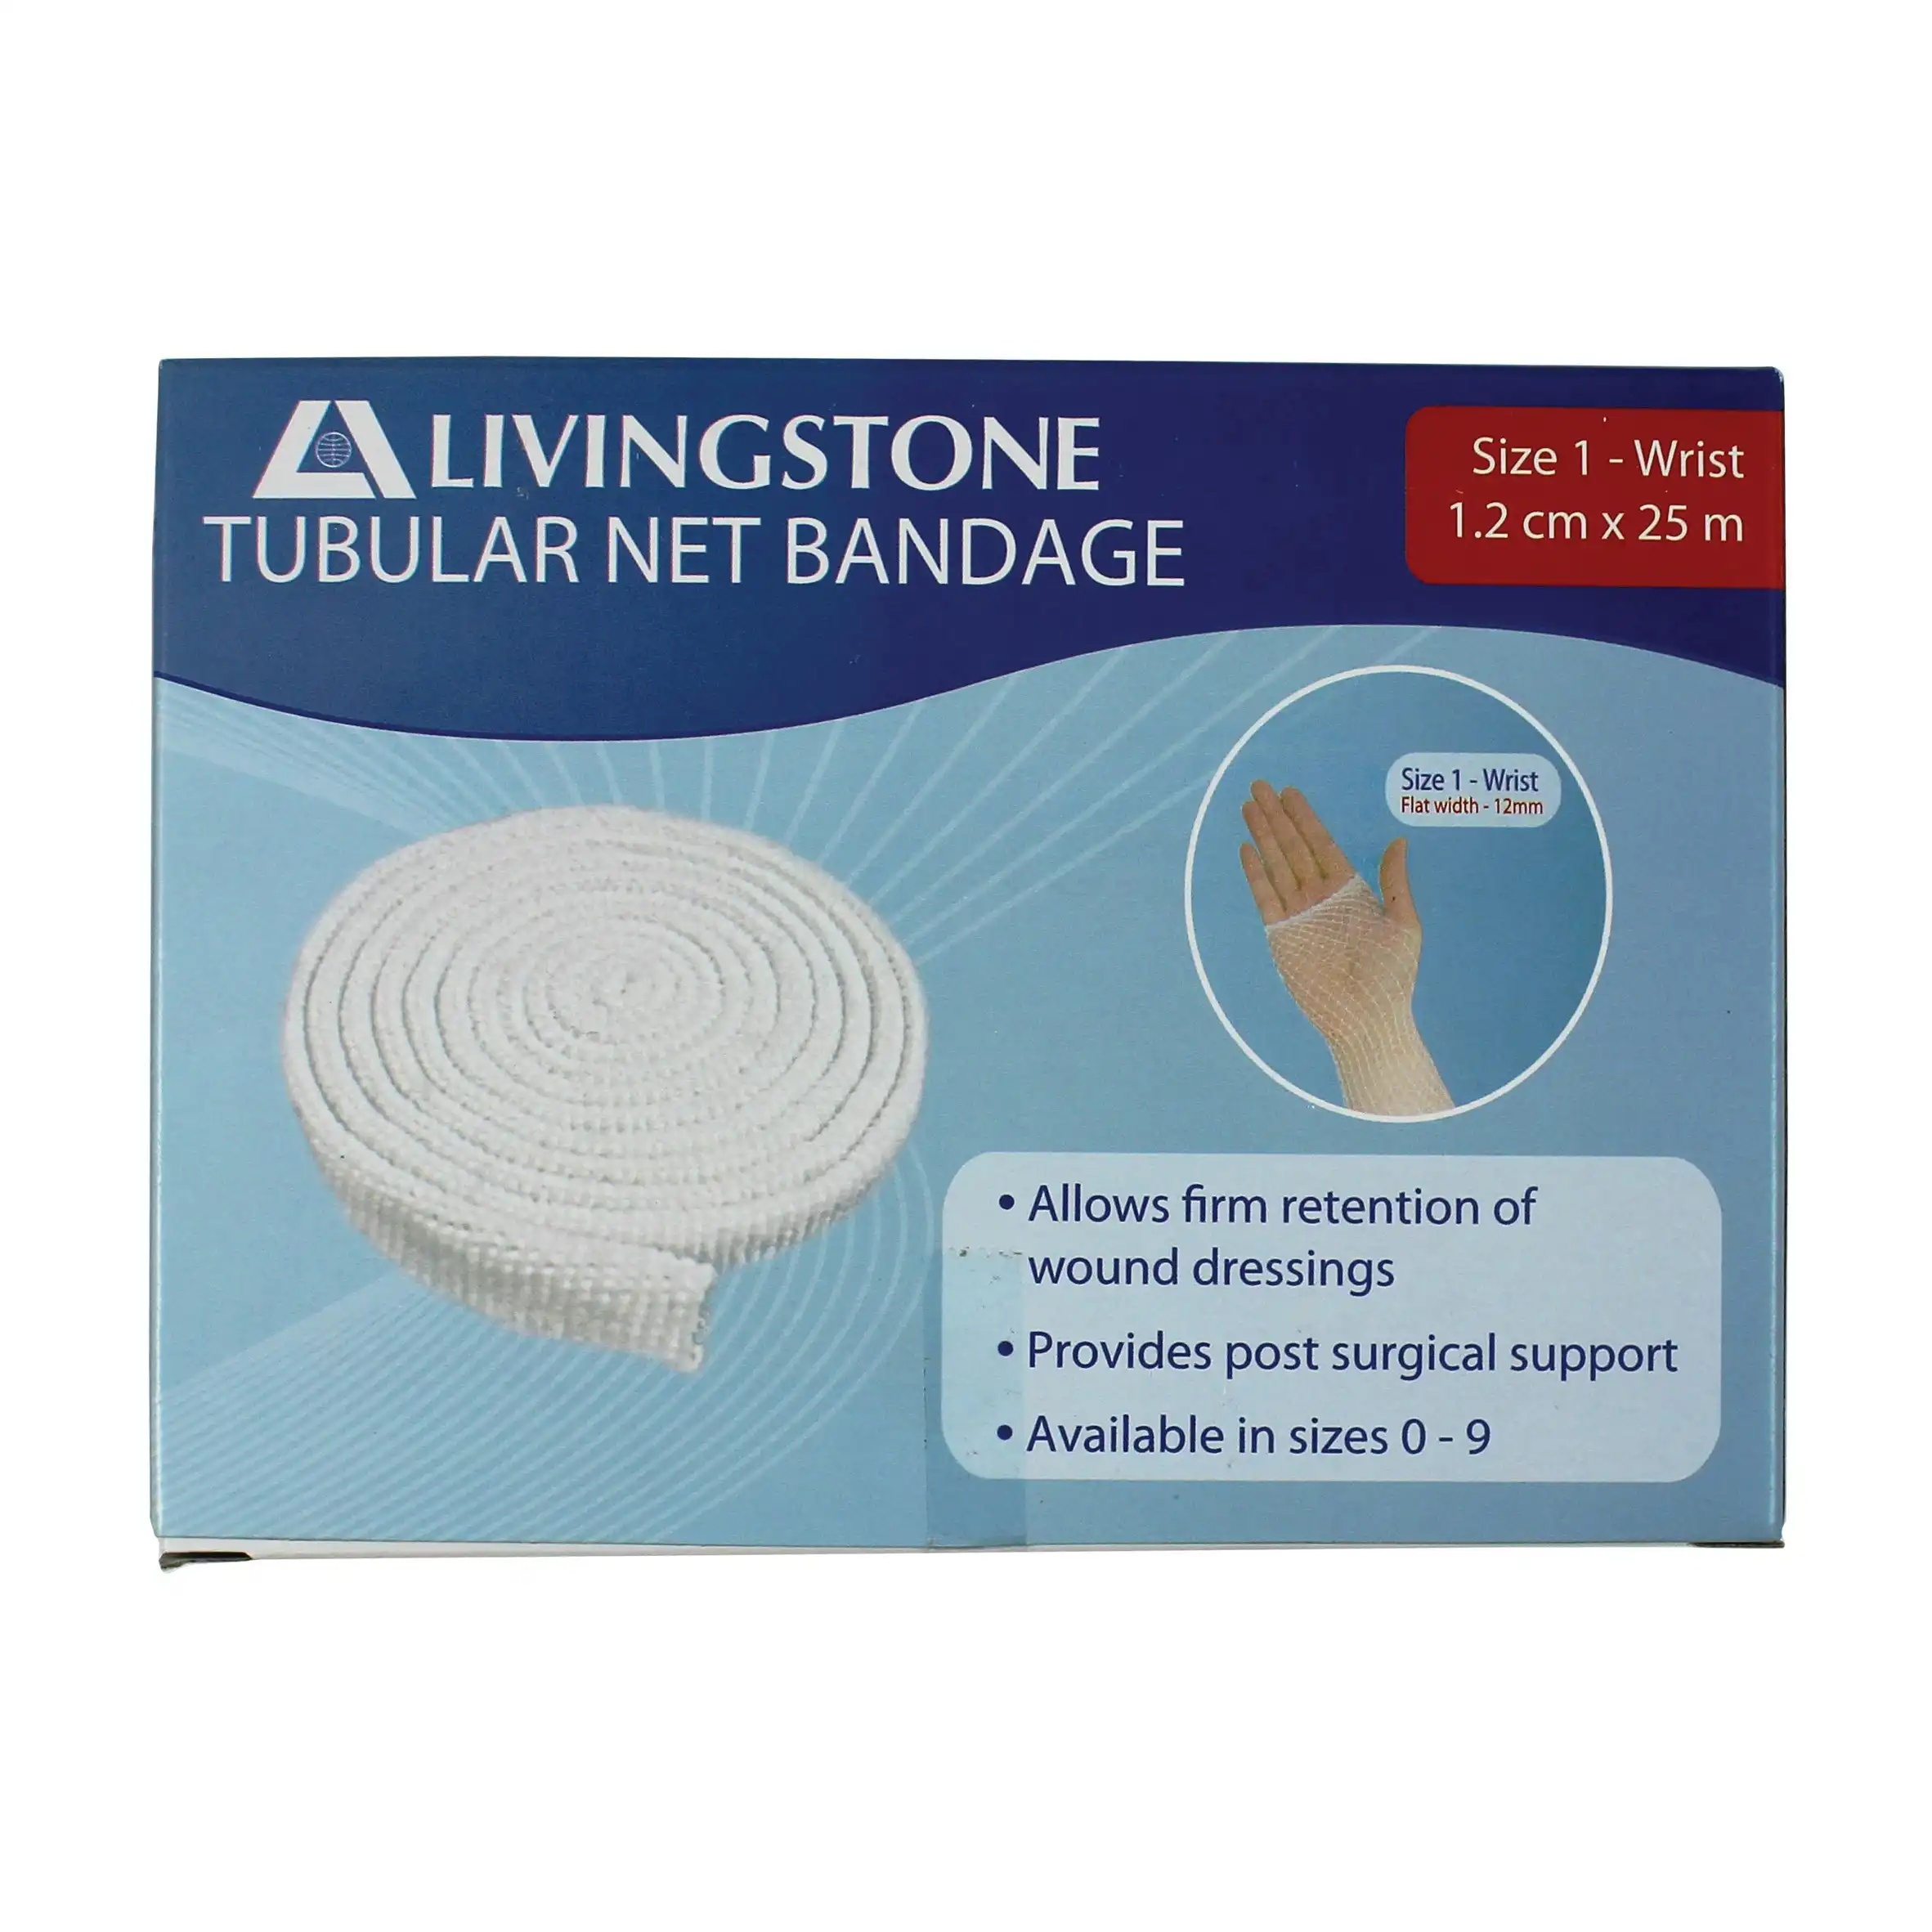 Livingstone Tubular Net Bandage Size B No. 1 Wrist Flat Width 12mm 7.5m (unstretched) 25m (stretched)